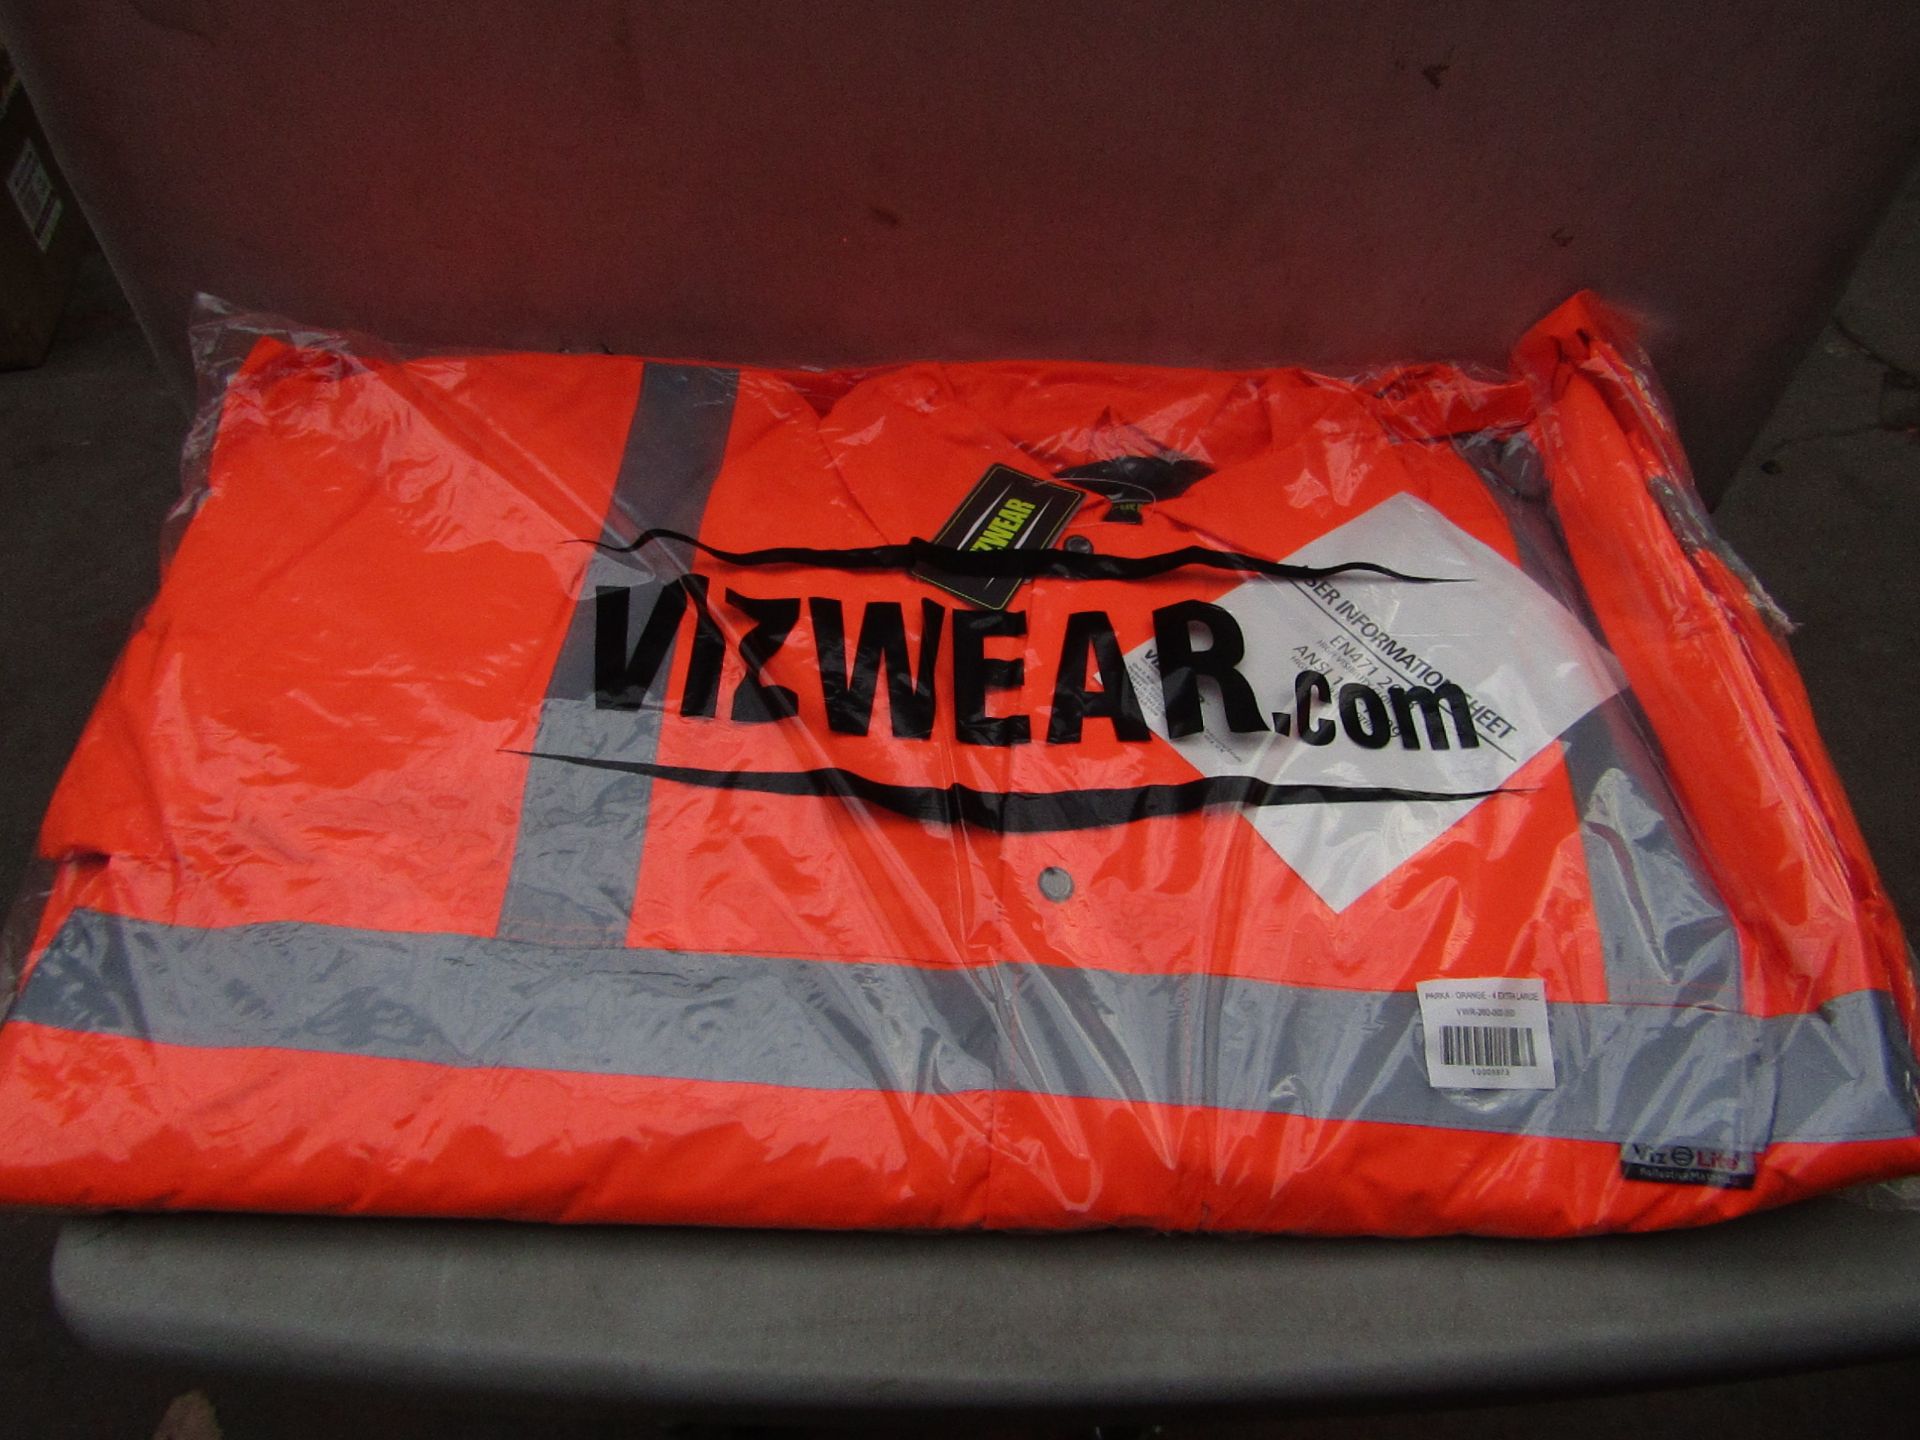 Vizwear - Hi-Vis Orange Parka Coat - Size 4XL - Unused & Packaged.